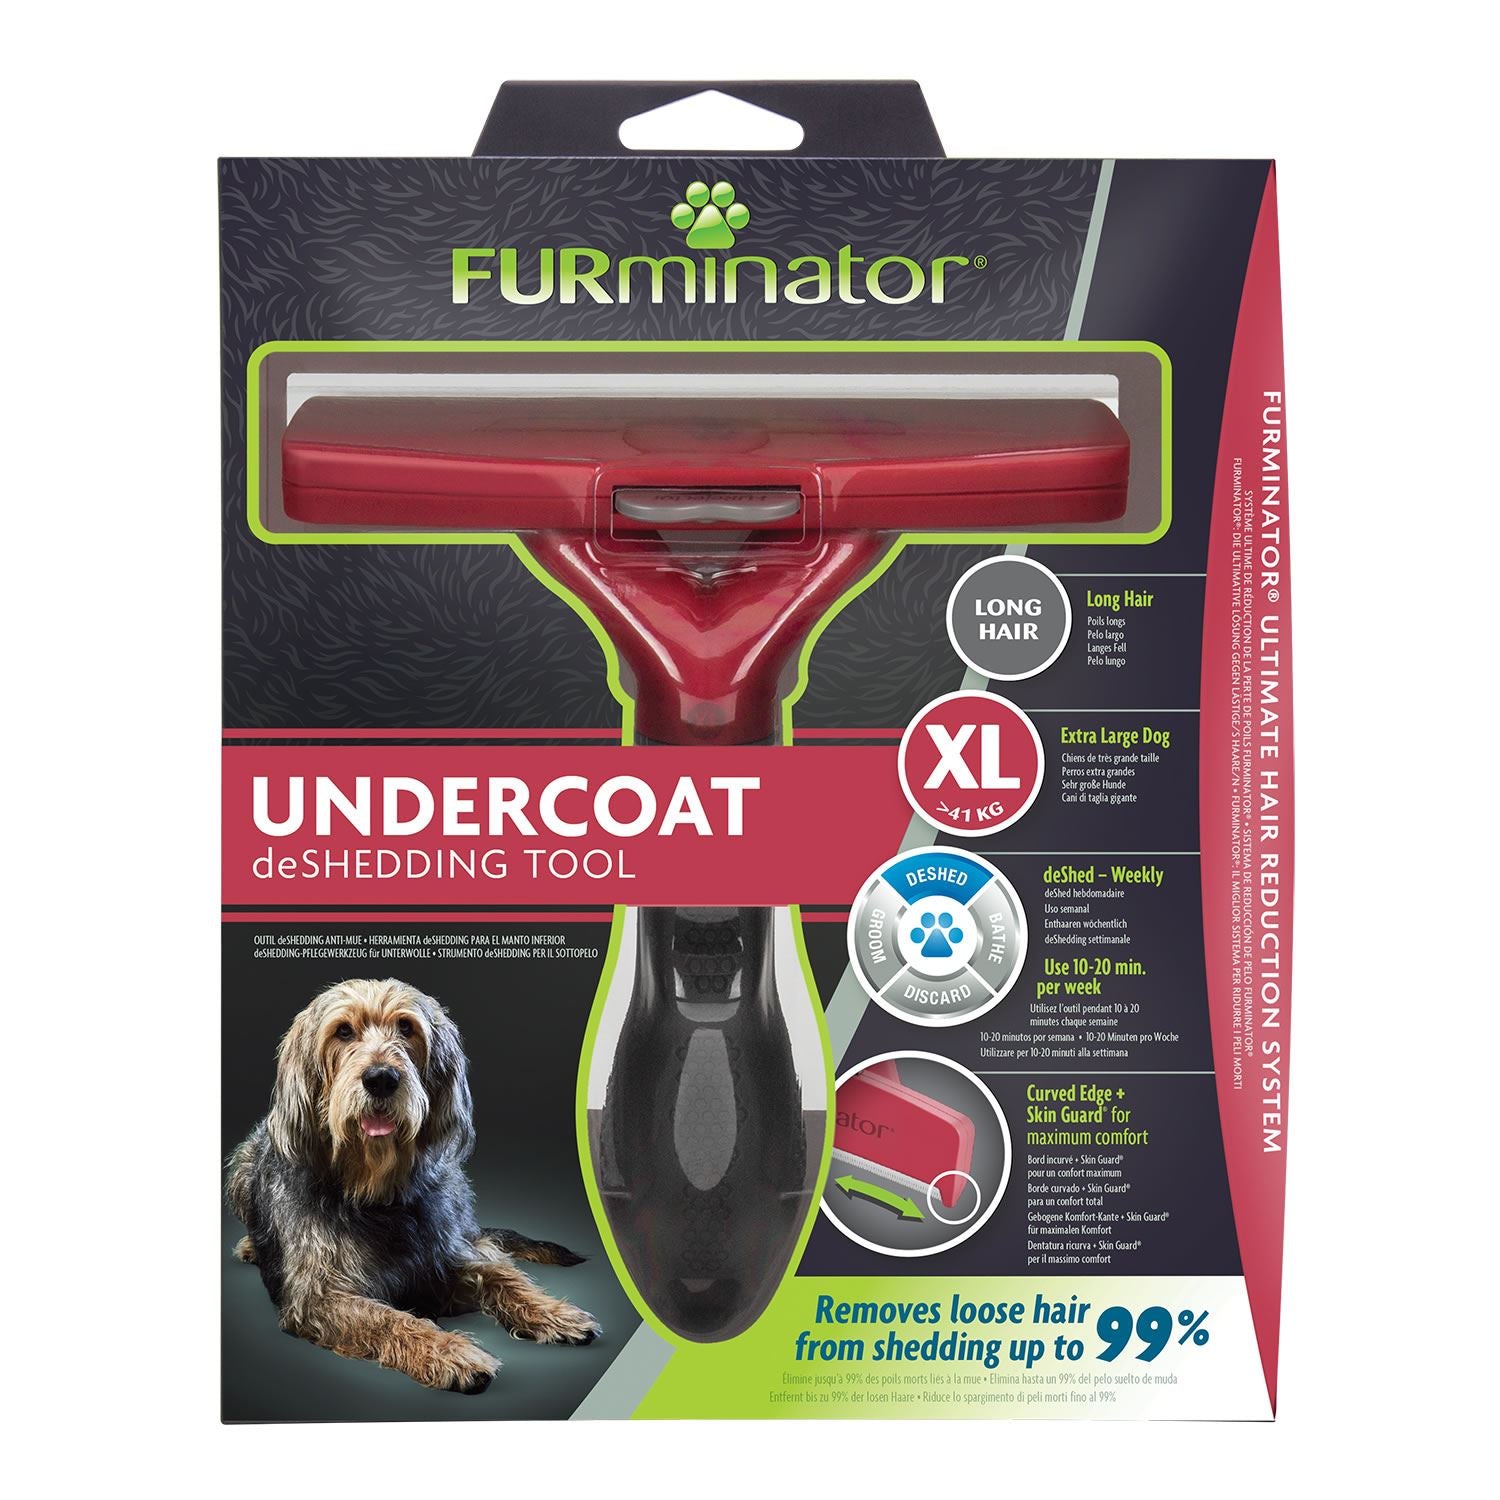 Furminator Undercoat Deshedding Tool For Long Hair Dog - Just Horse Riders